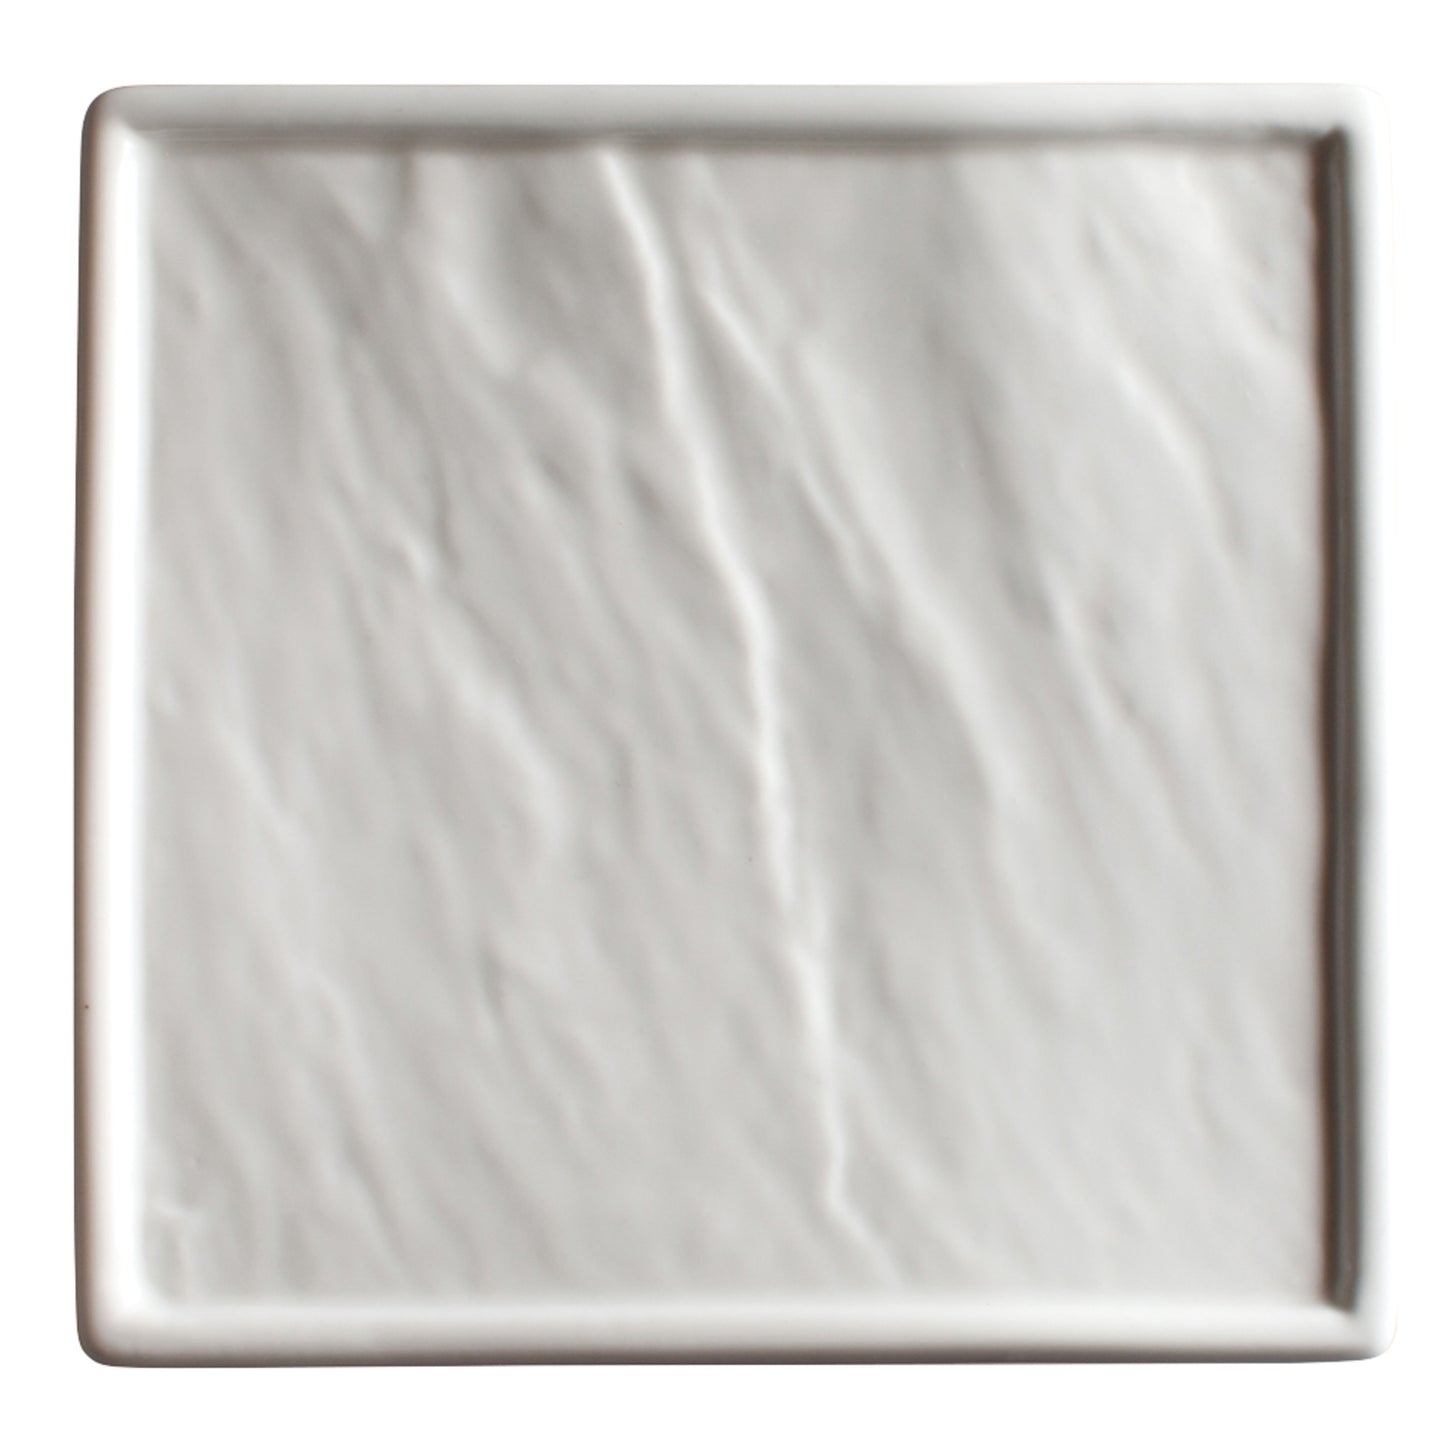 WDP001-206 - Calacatta Porcelain Square Platter, Creamy White - 8-1/2"